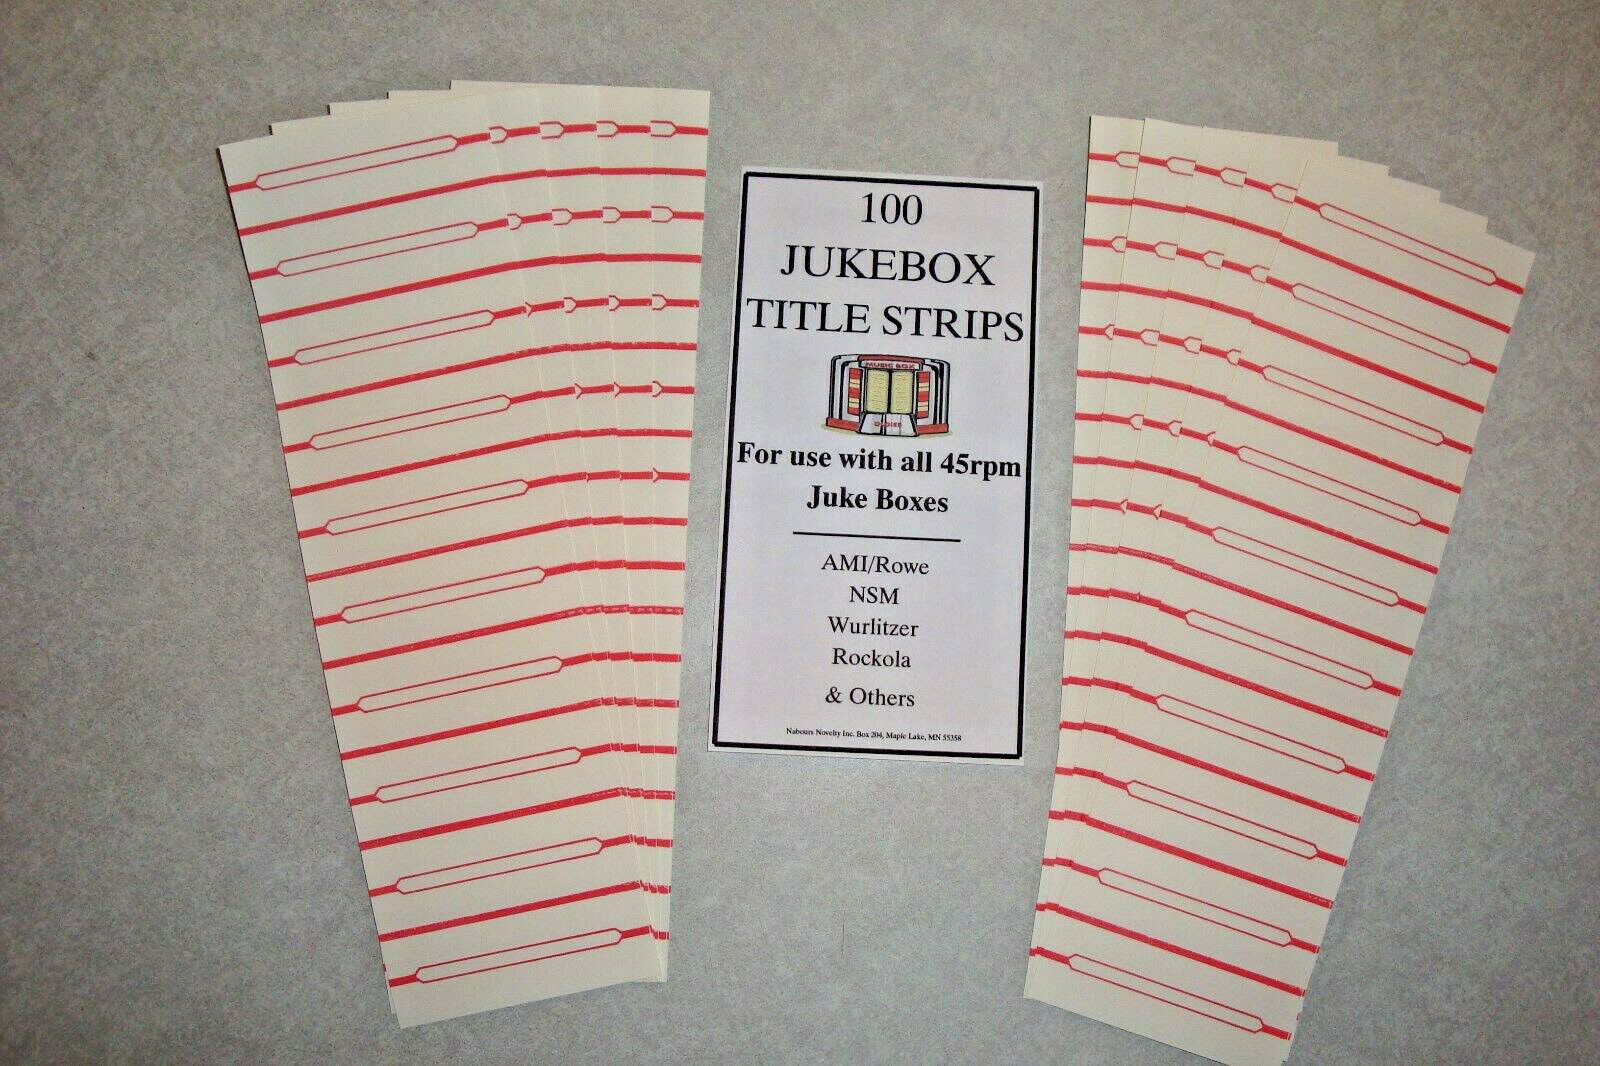 Jukebox Blank Title Strips, Jukebox Labels, 45rpm, 100 Strips, $4.99 Shipping